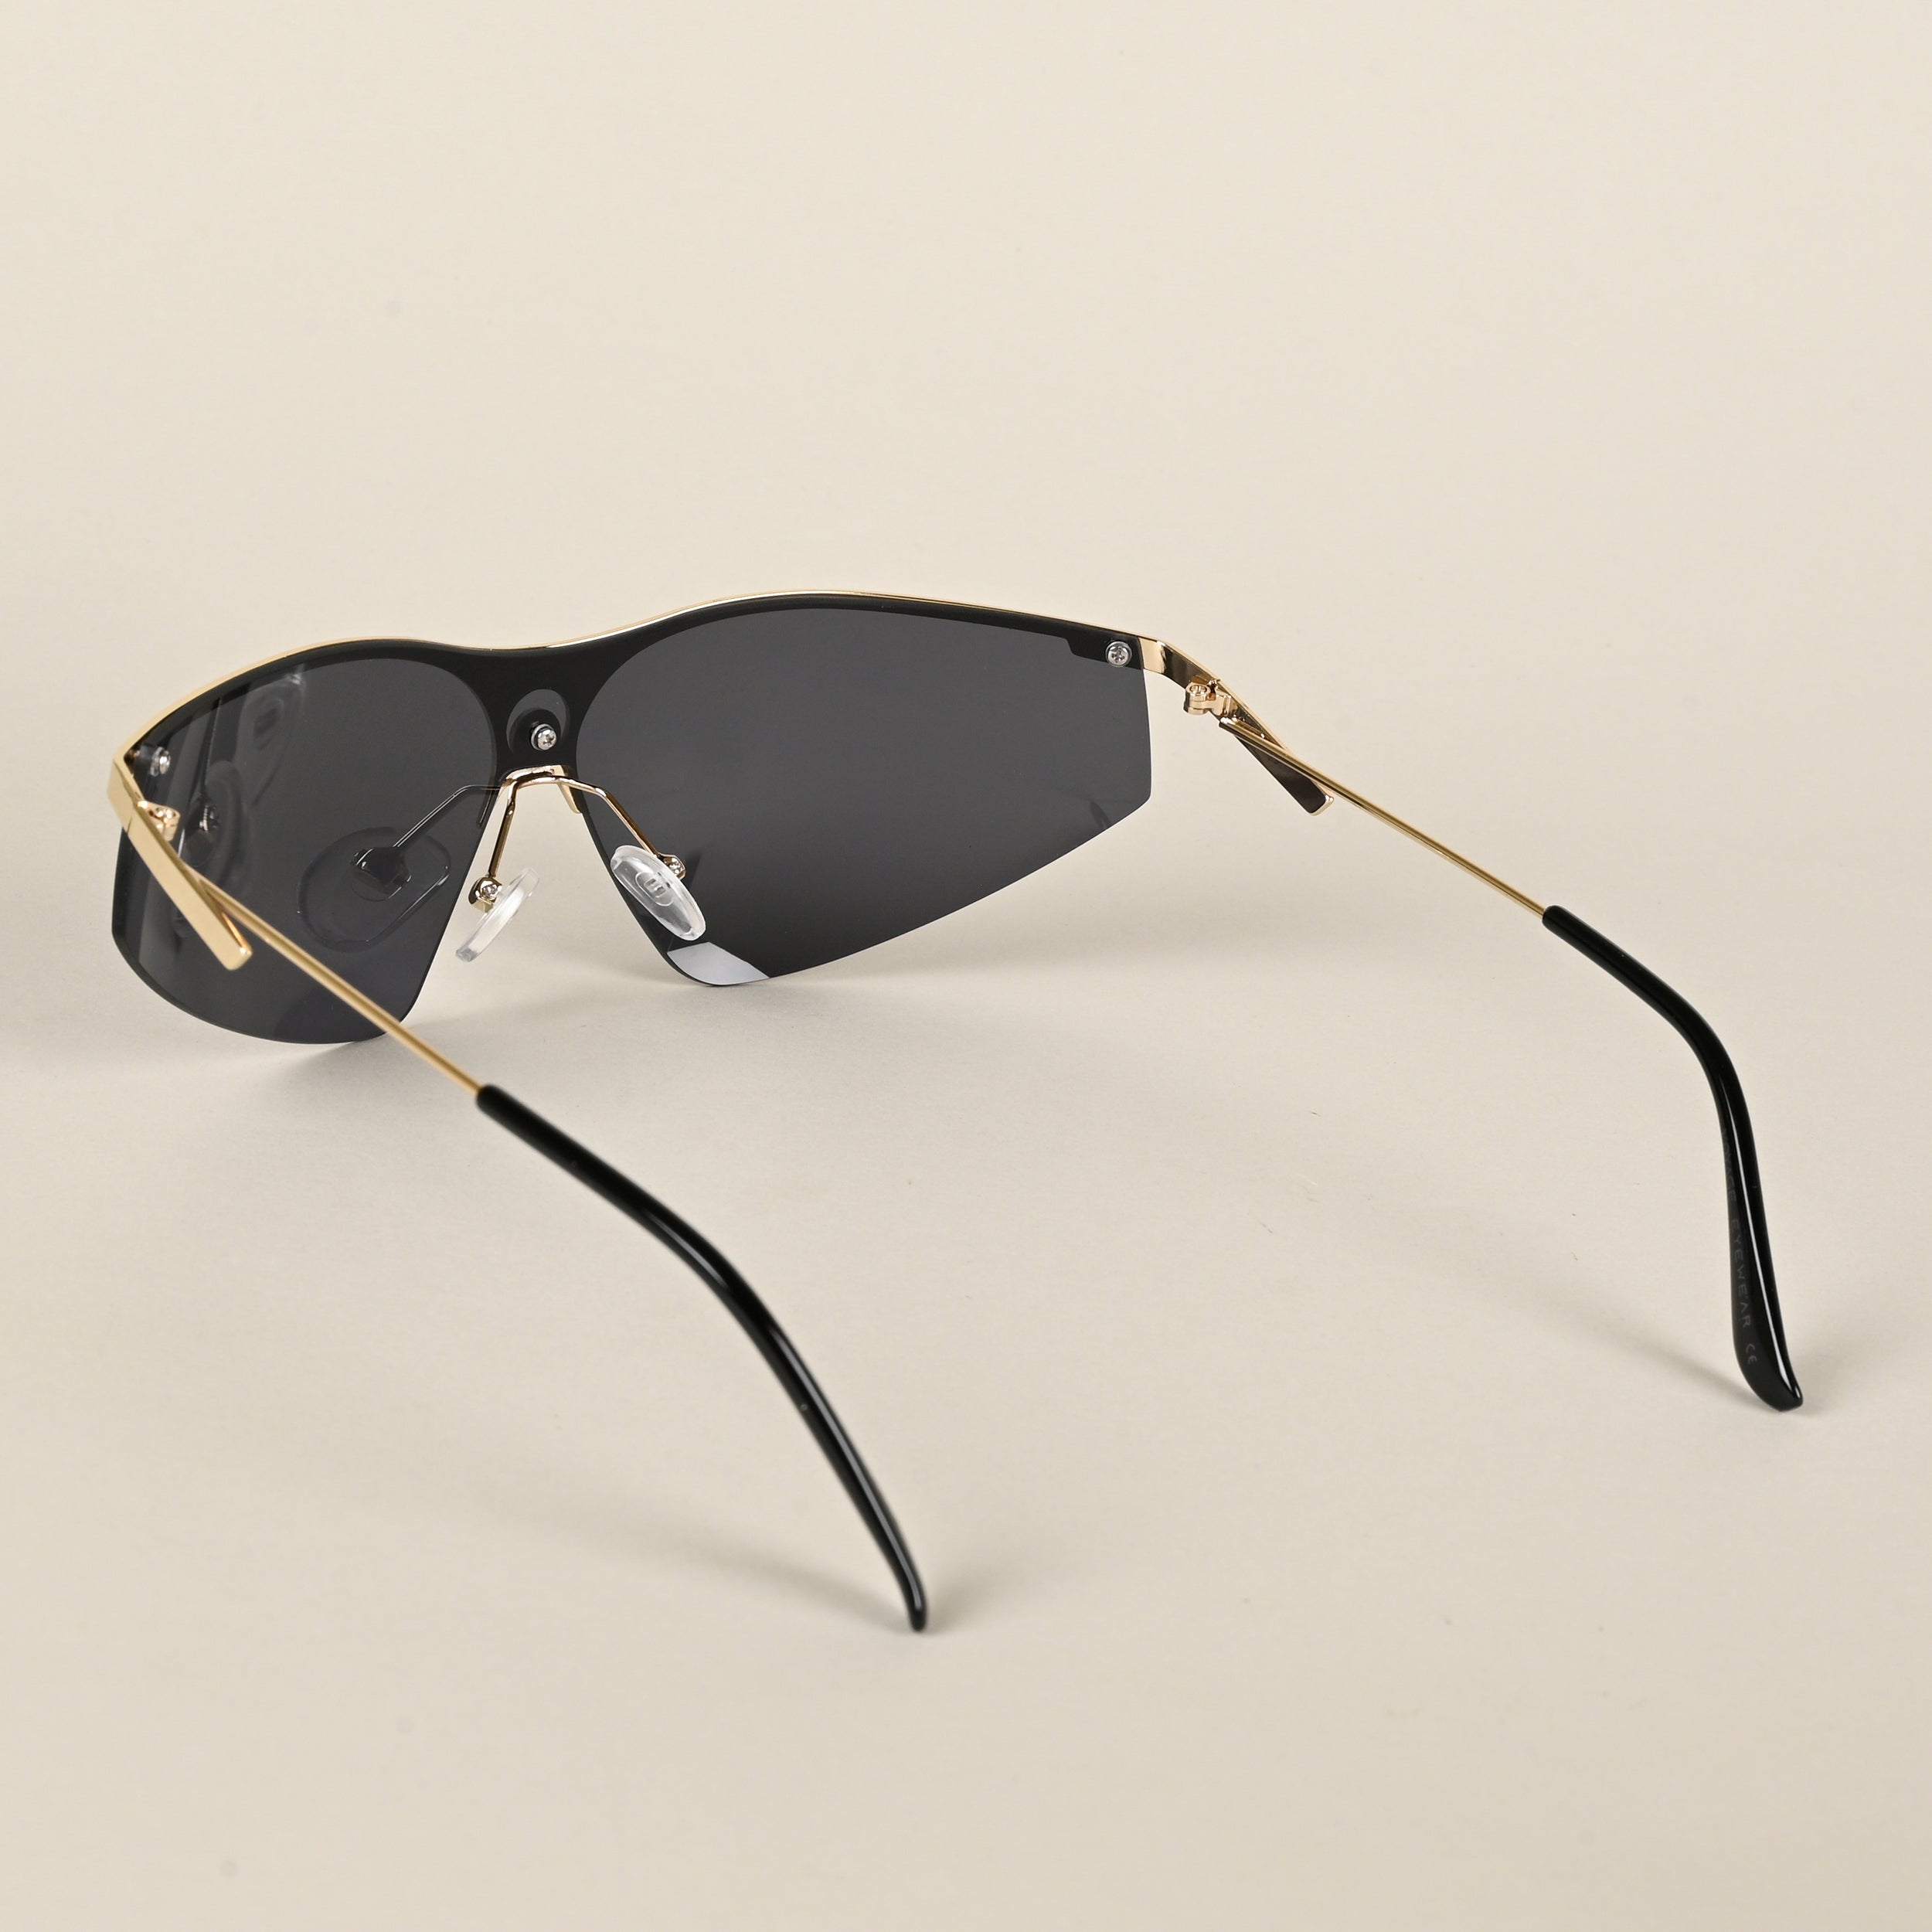 Voyage Black Wrap-Around Sunglasses for Men & Women (3563MG4219)